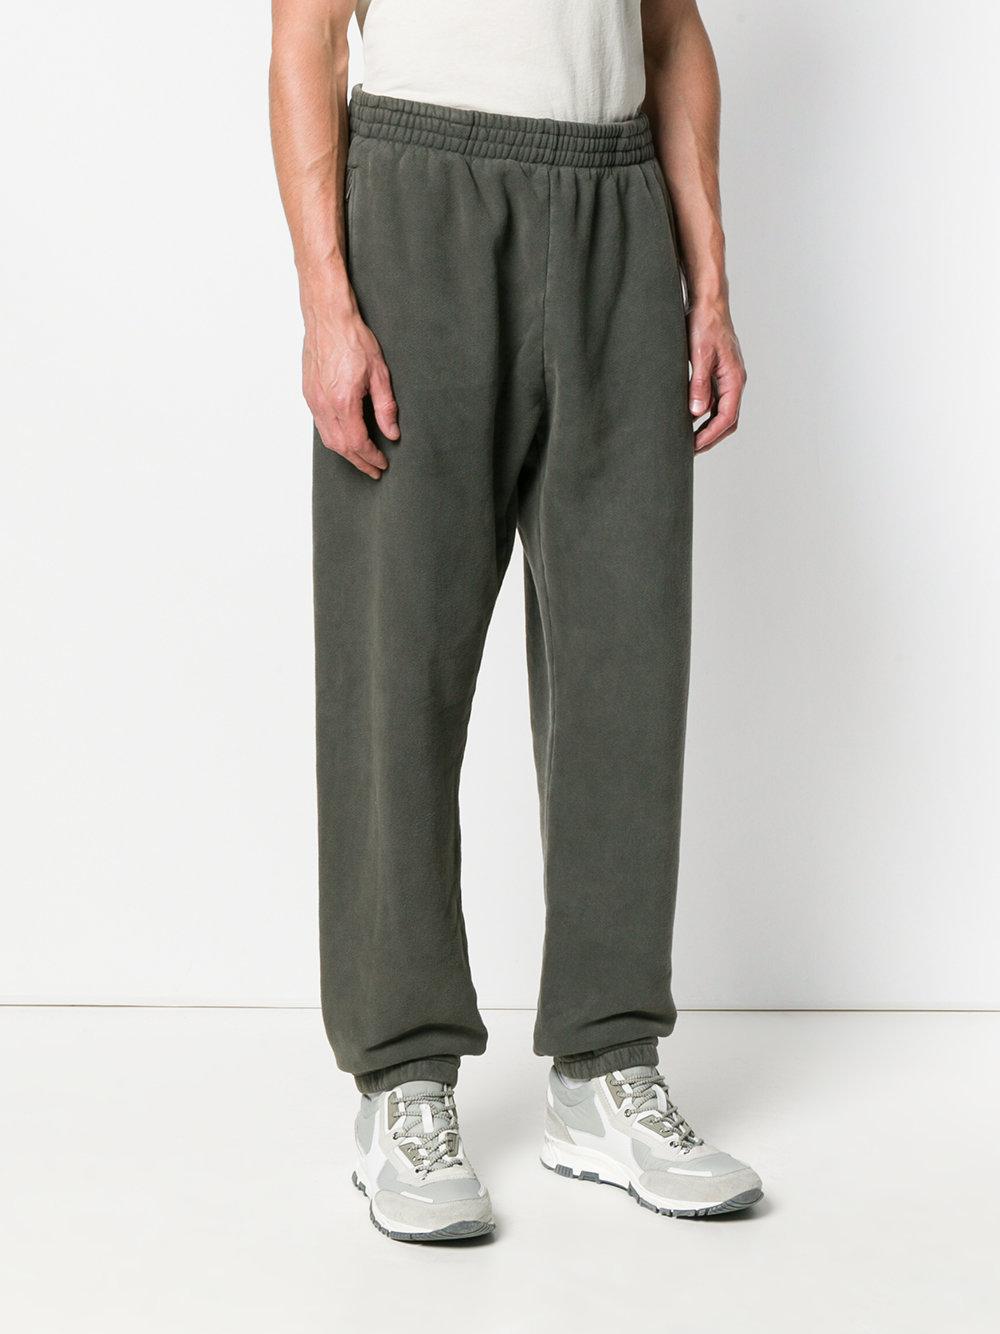 Yeezy Season 6 Sweatpants in Grey (Gray 